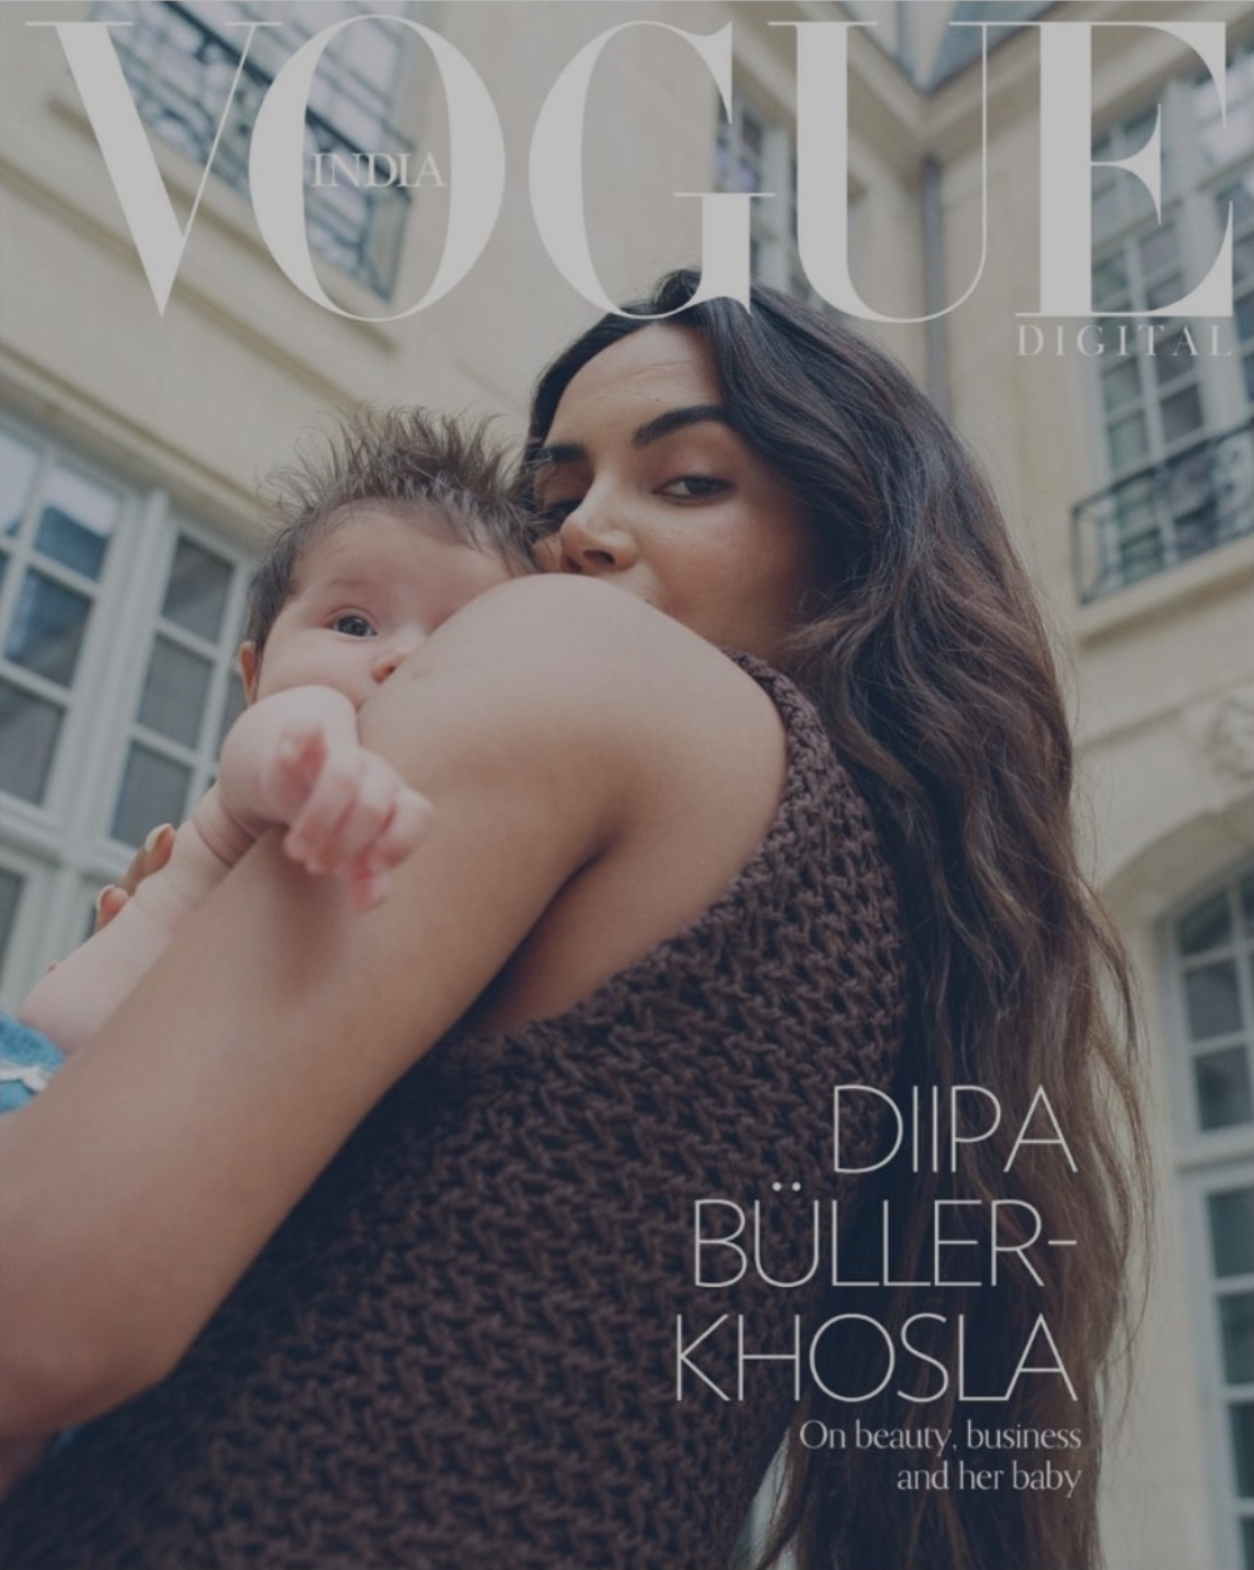 Motherhood, social media, and the true business of beauty with Diipa Büller-Khosla